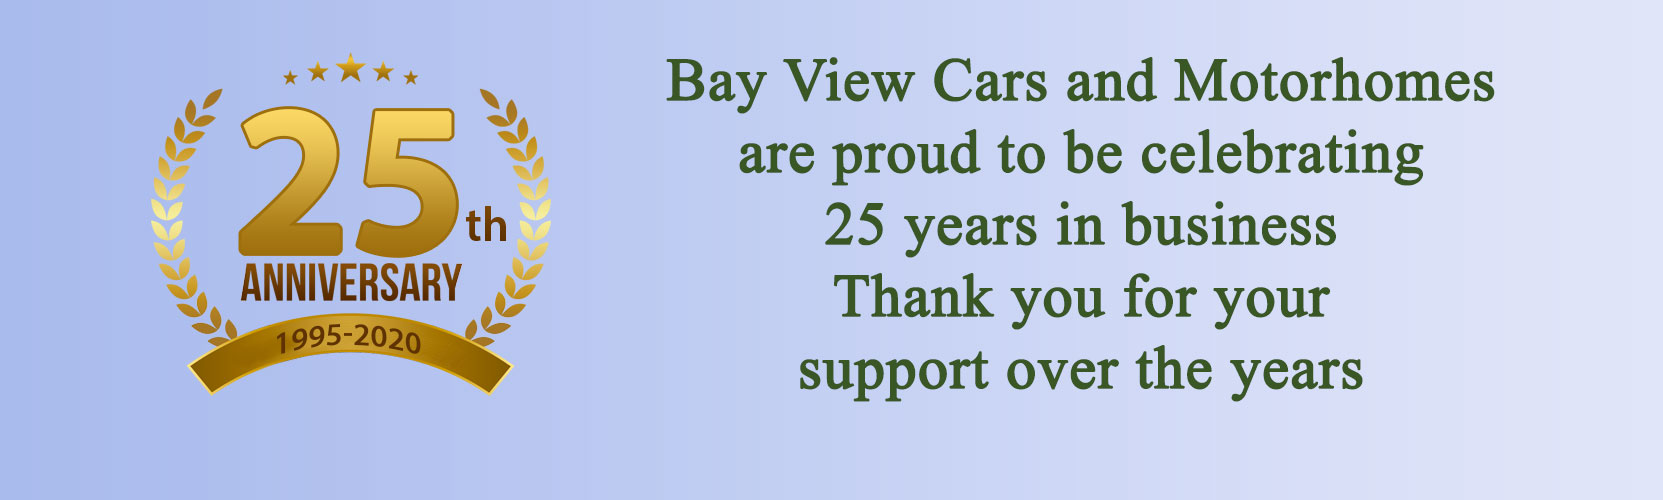 Celebrating 25 years at Bay View Cars